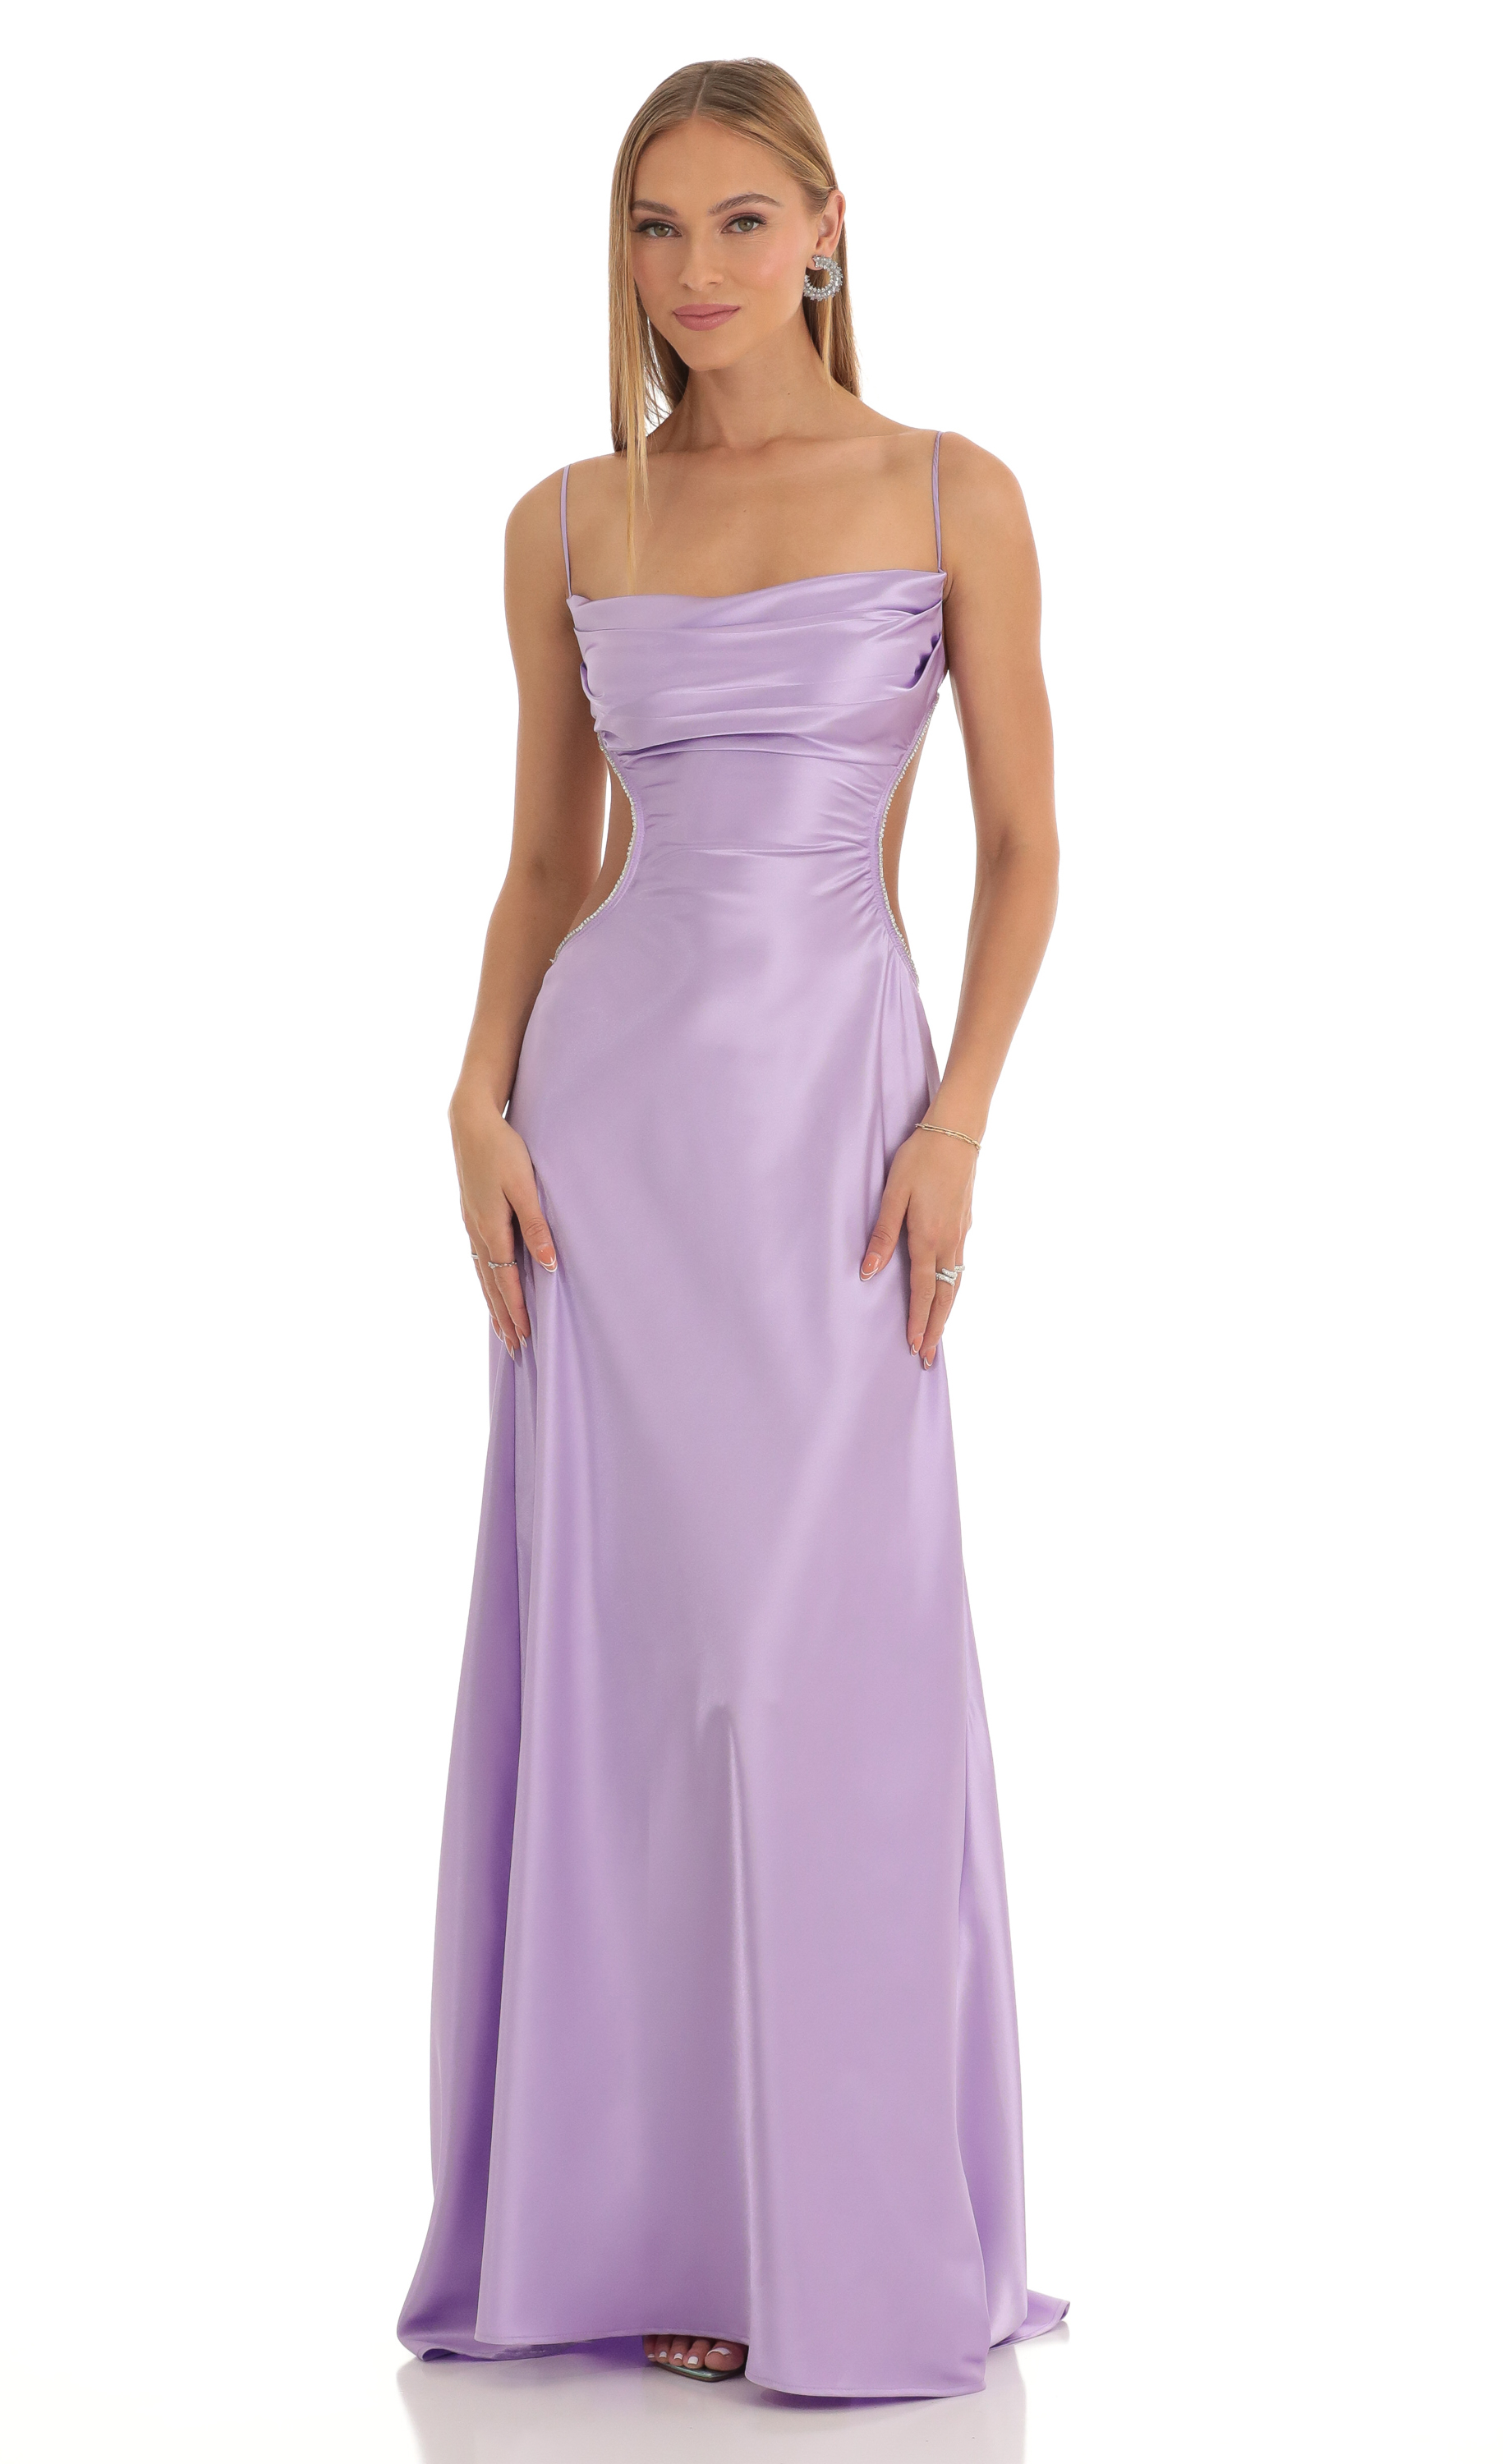 Calissa Satin Rhinestone Maxi Dress in Purple